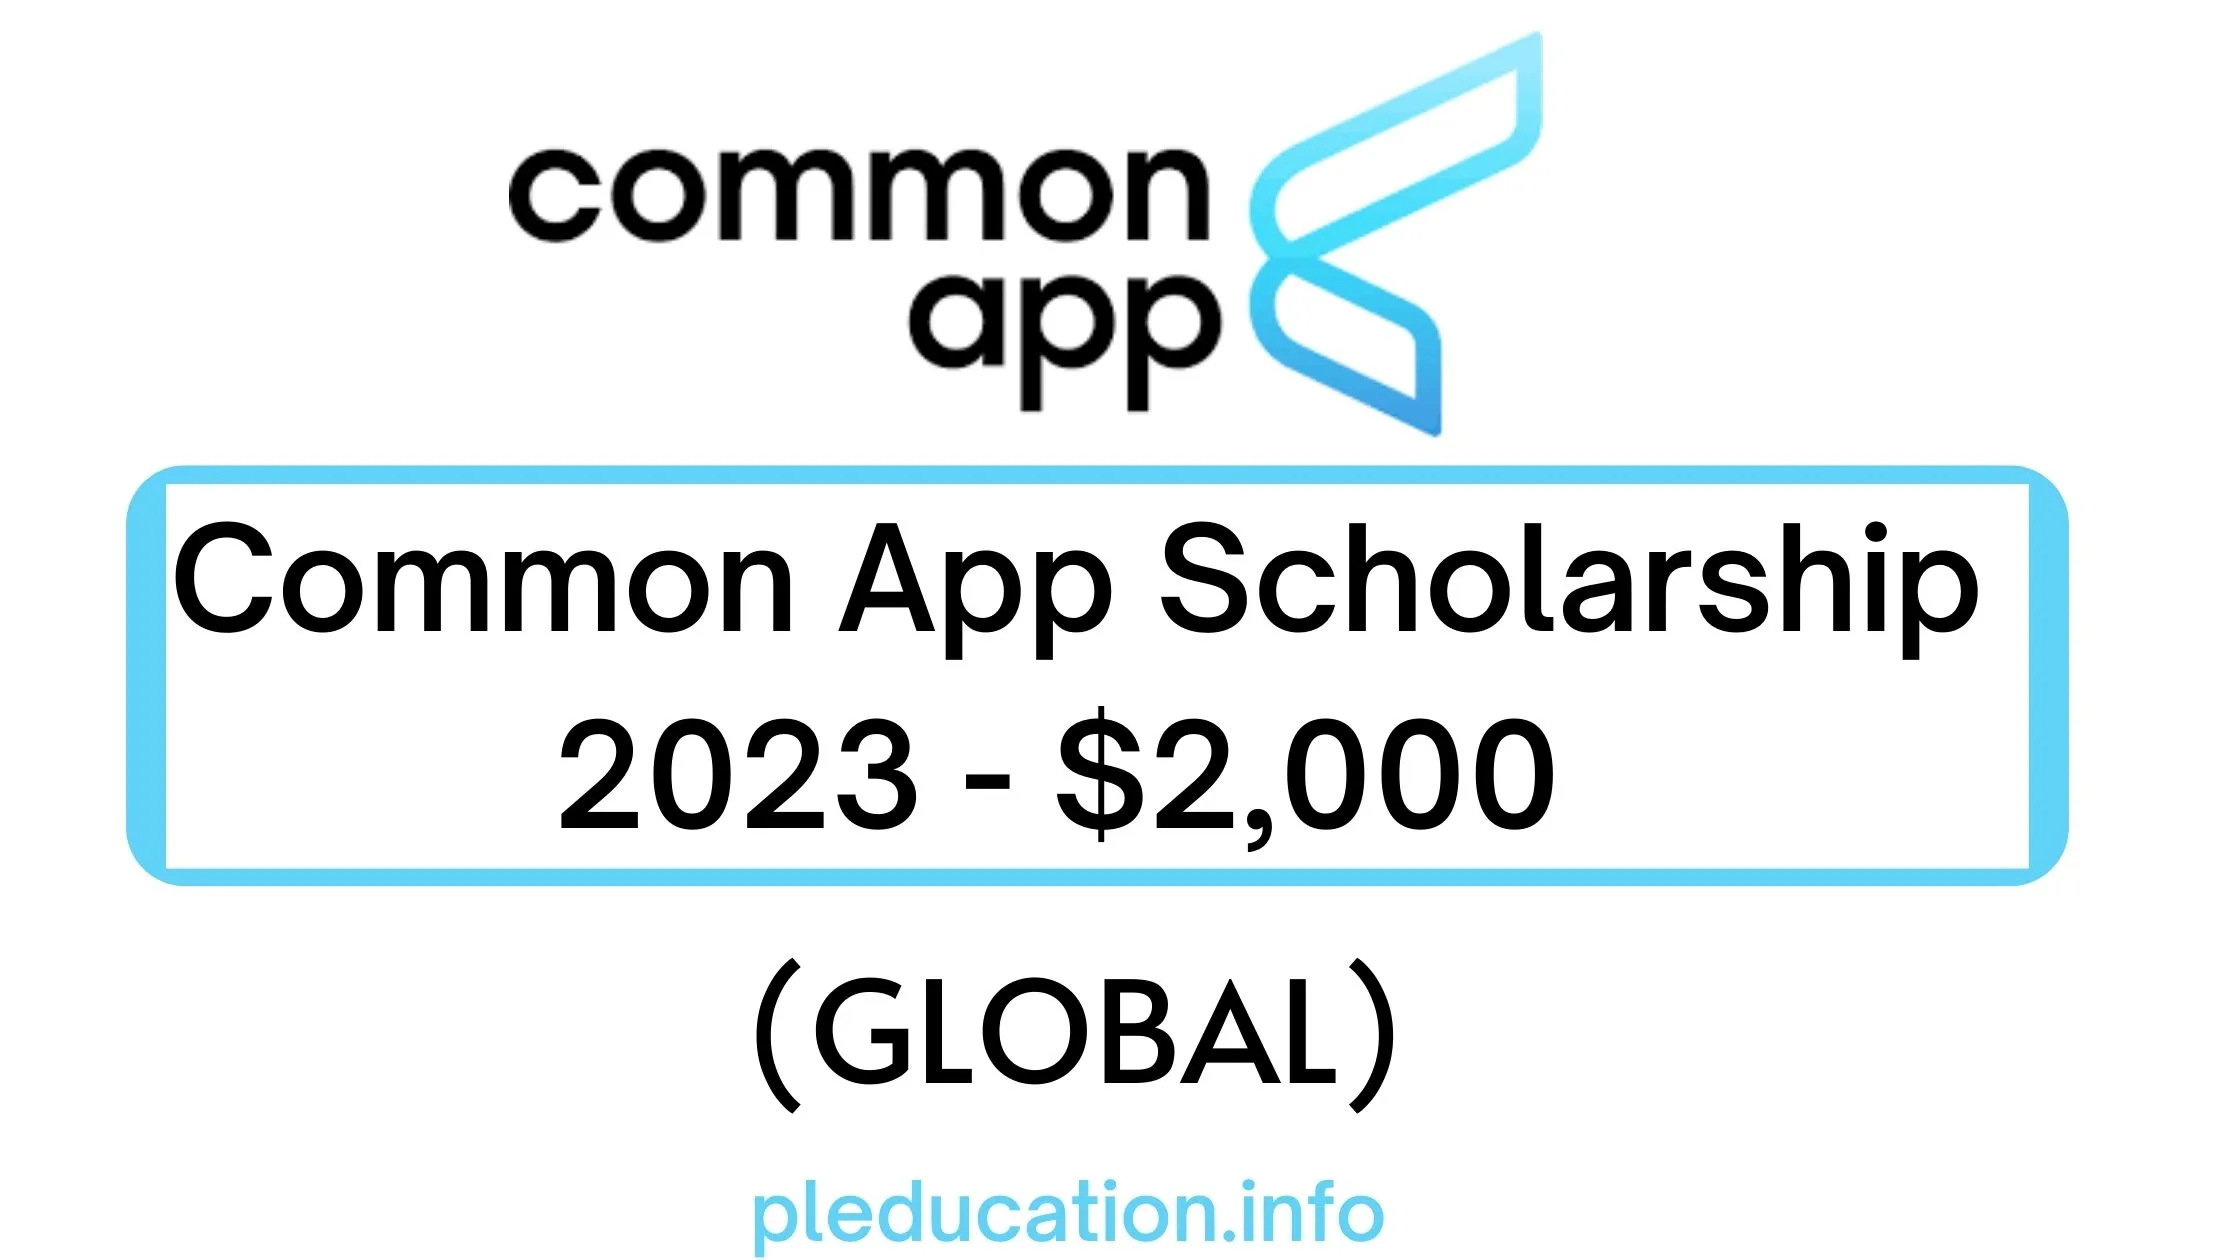 Common App Scholarship 2023 - $2,000